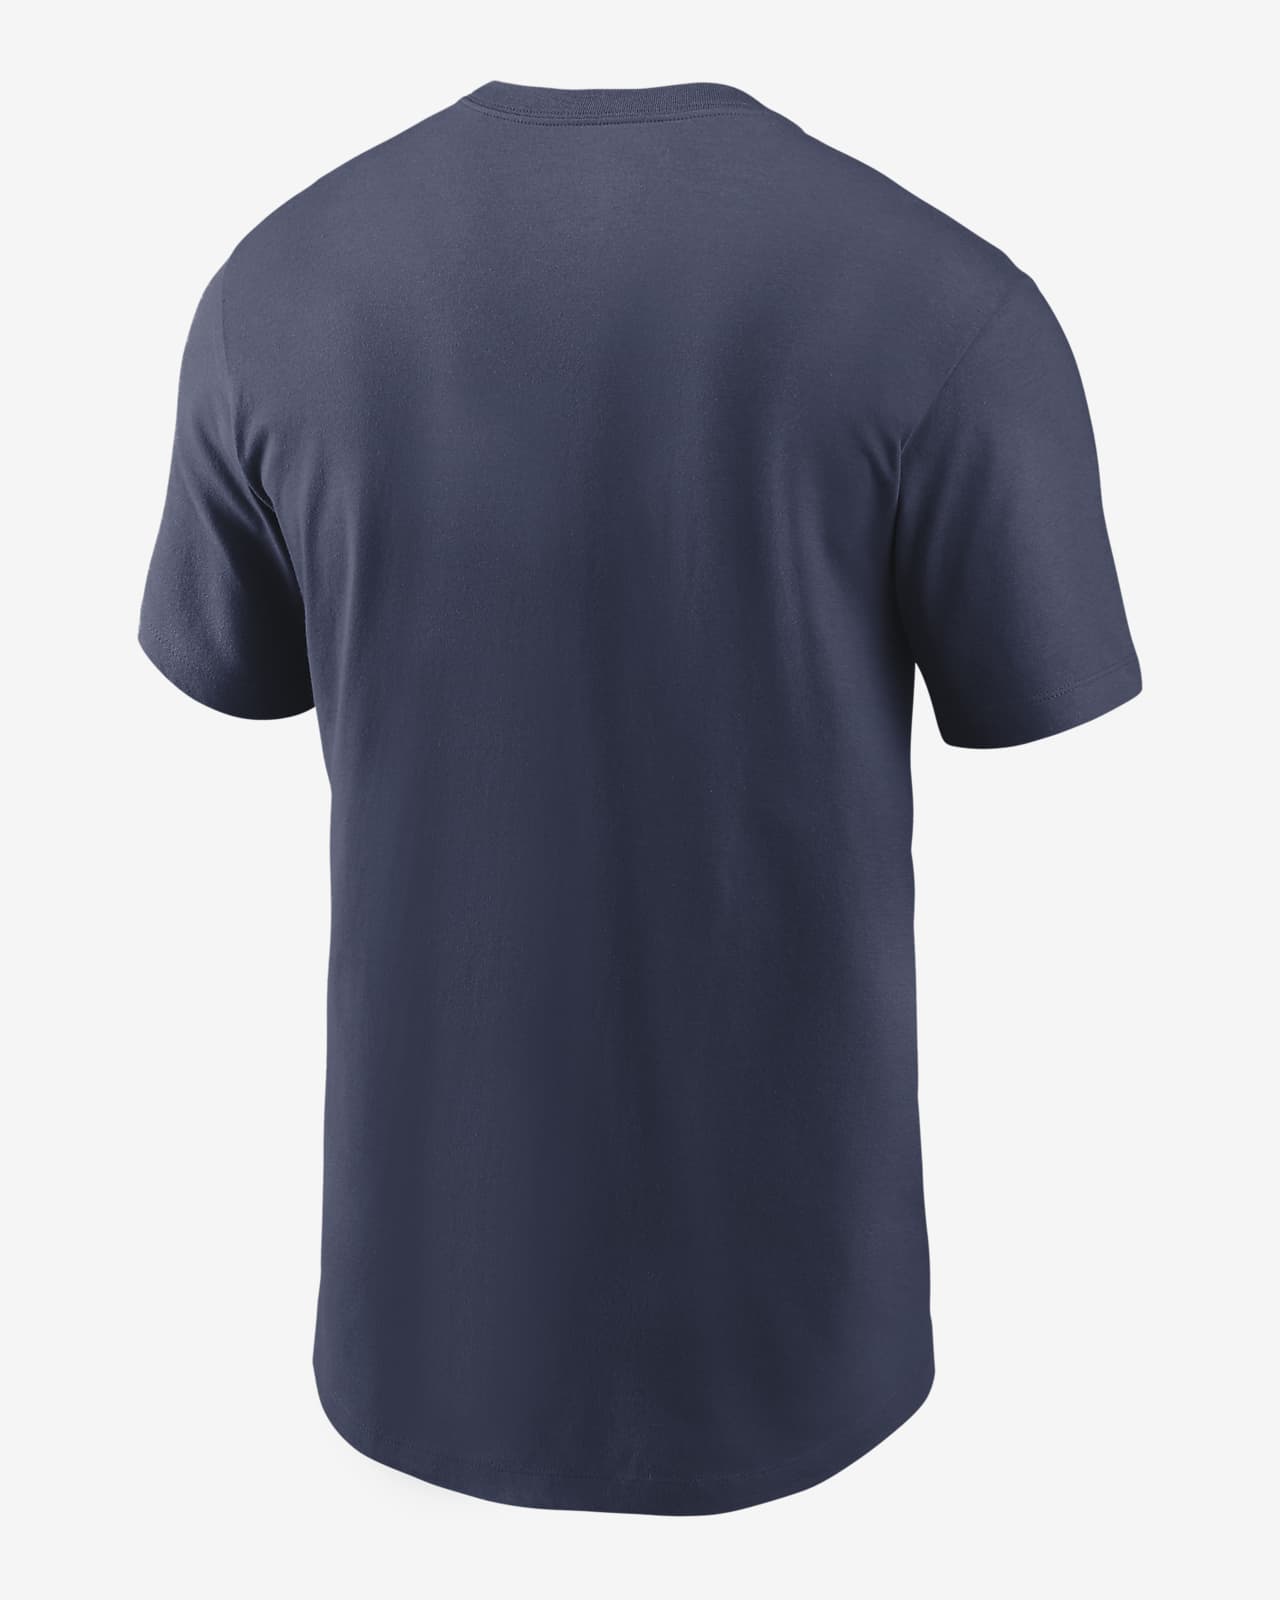 Lids Boston Red Sox Nike Local Logo Legend T-Shirt - Heathered Gray